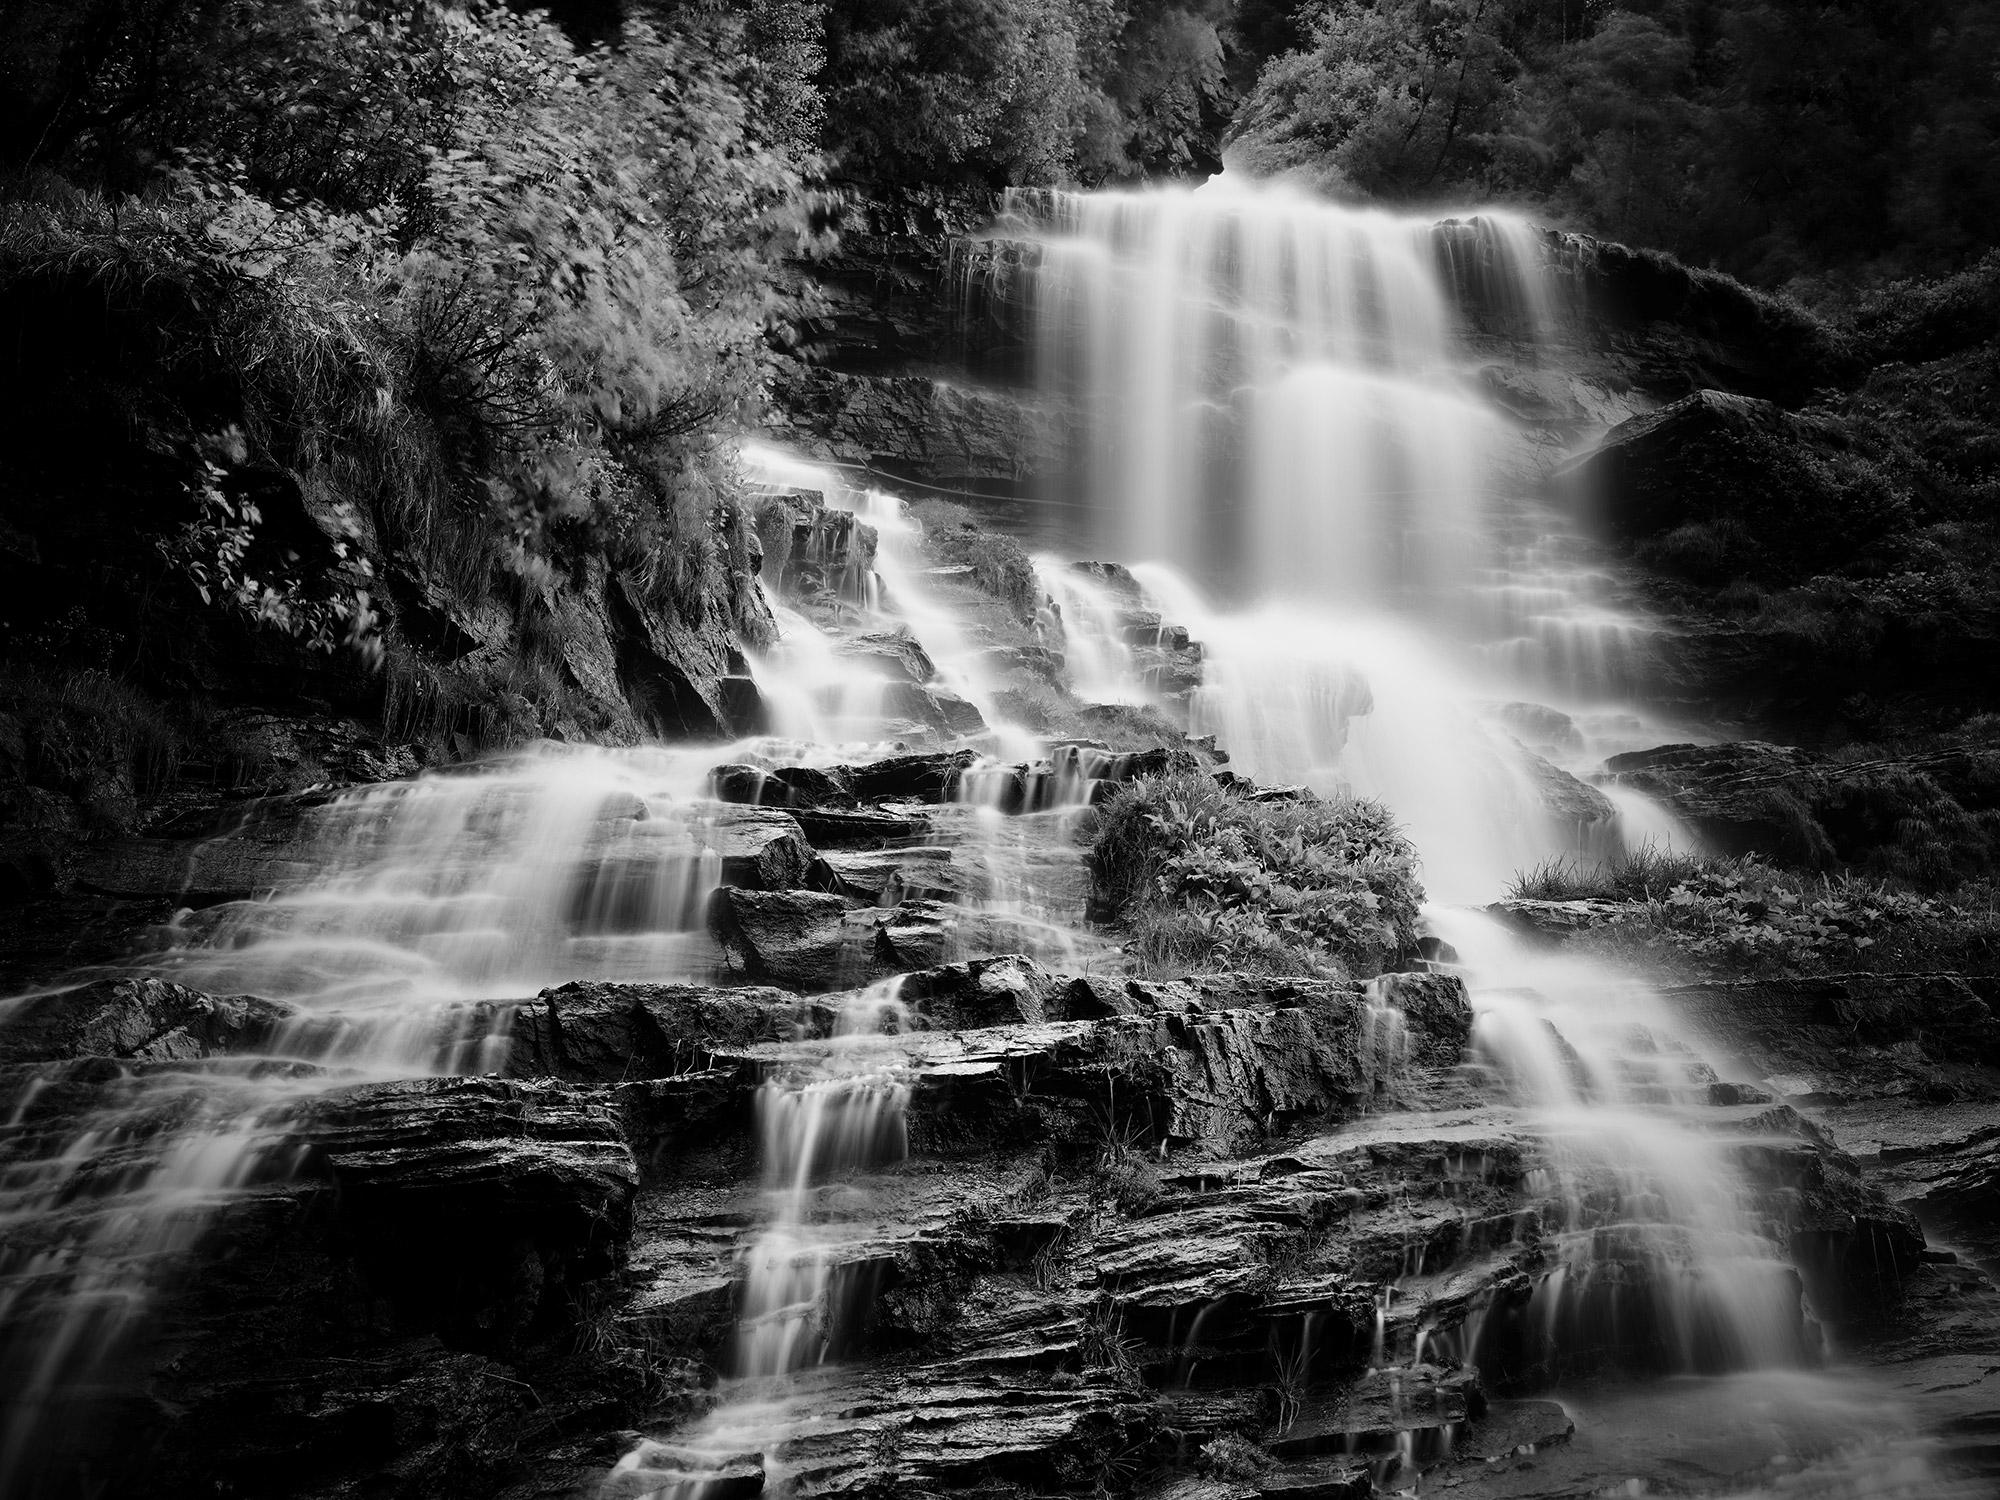 Gerald Berghammer Landscape Photograph - Klockelefall, Waterfall, Mountain stream, black and white photography, landscape